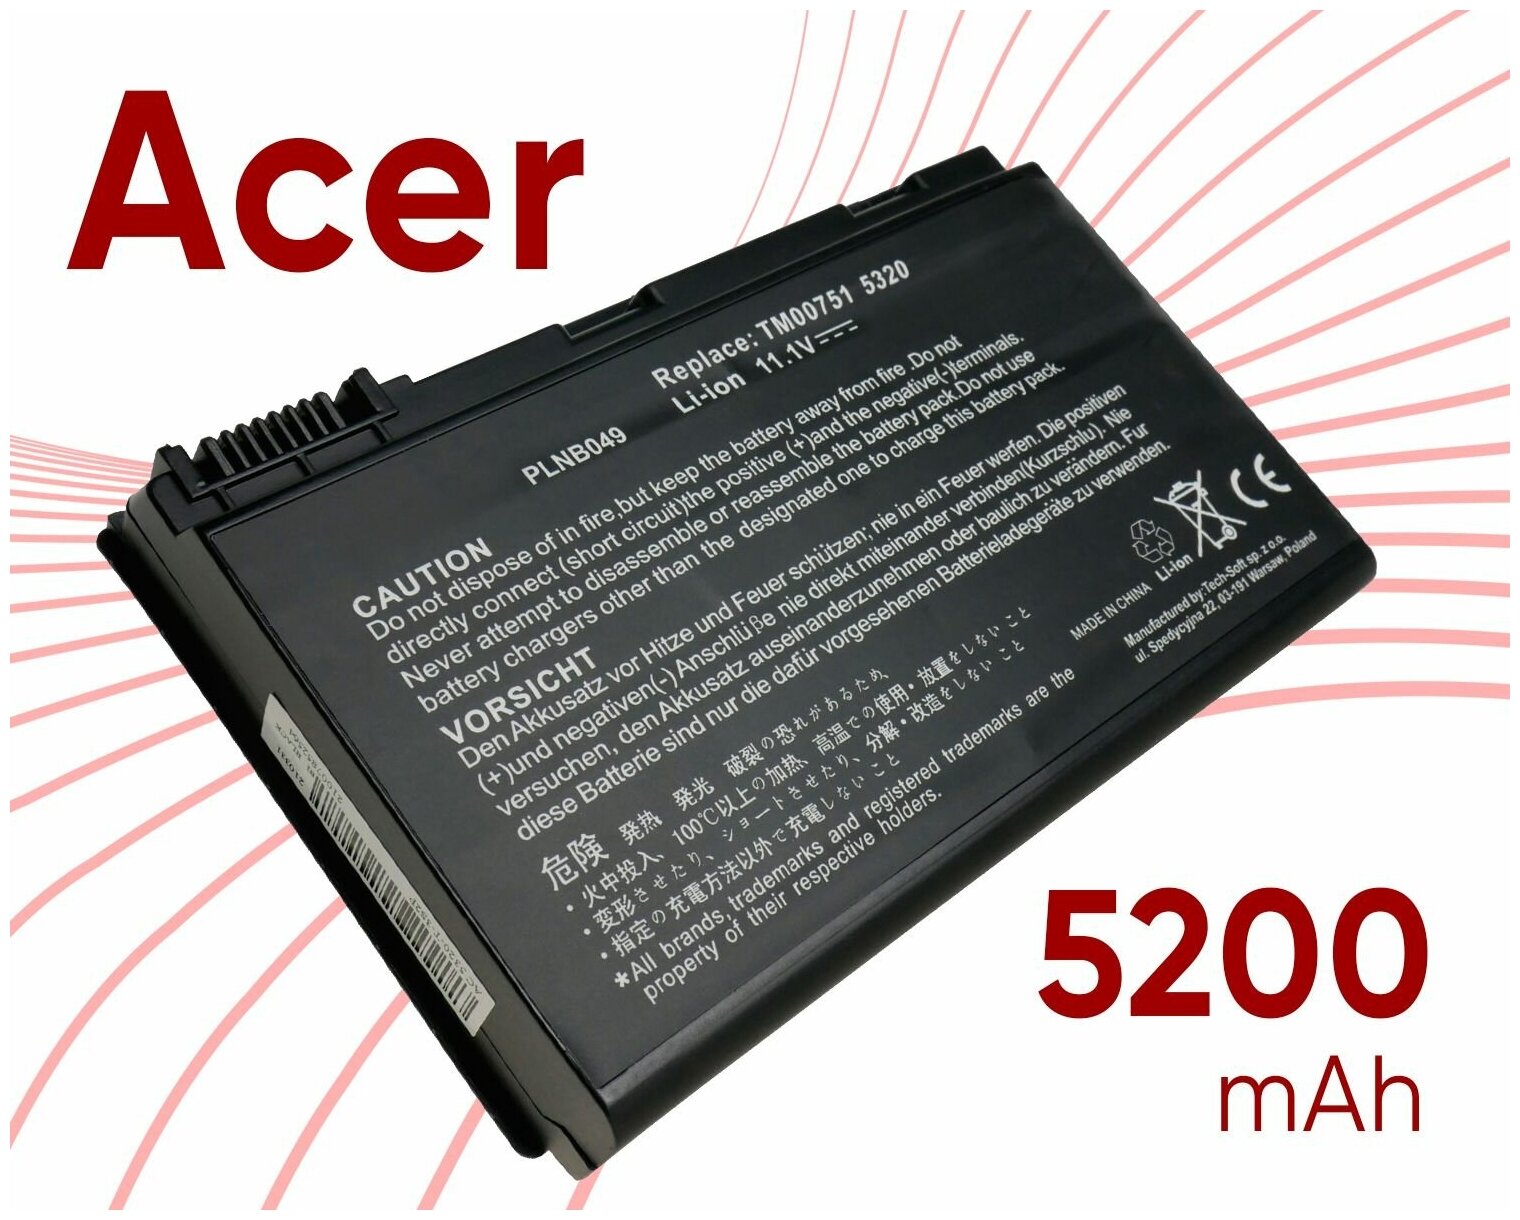 Аккумулятор для Acer GRAPE32 для Extensa 5220 / Extensa 5620 / Extensa 5620Z / Extensa 5630G 5620G / TravelMate 5320 5720 5720G / Extensa 5210 / 7620G